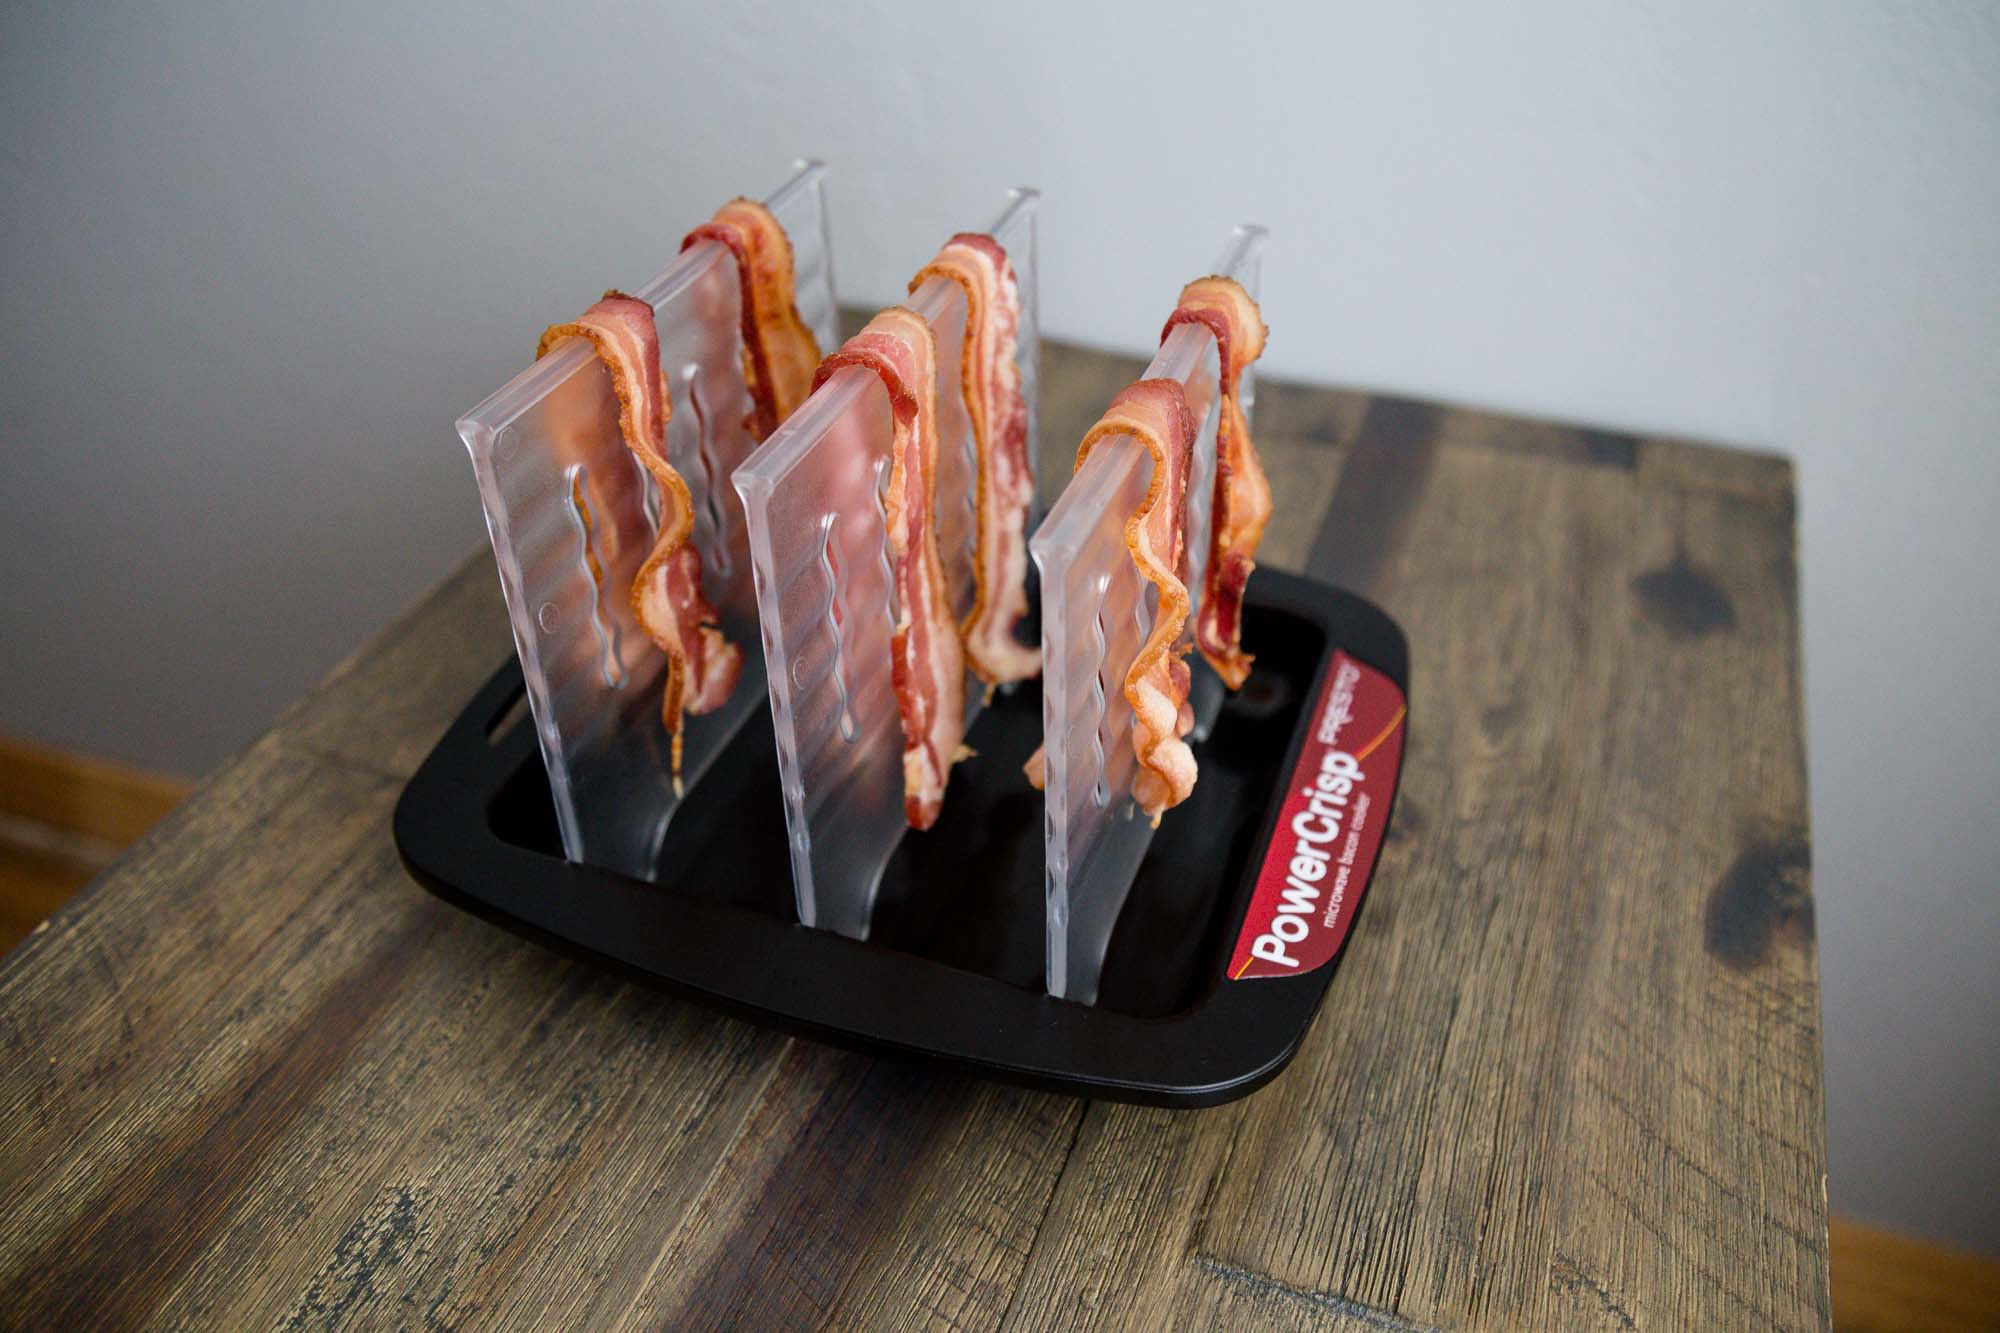 Microwave Bacon Rack Cooker Tray Cook Bar Crisp Breakfast Meal Home Dorm R SODIAL 